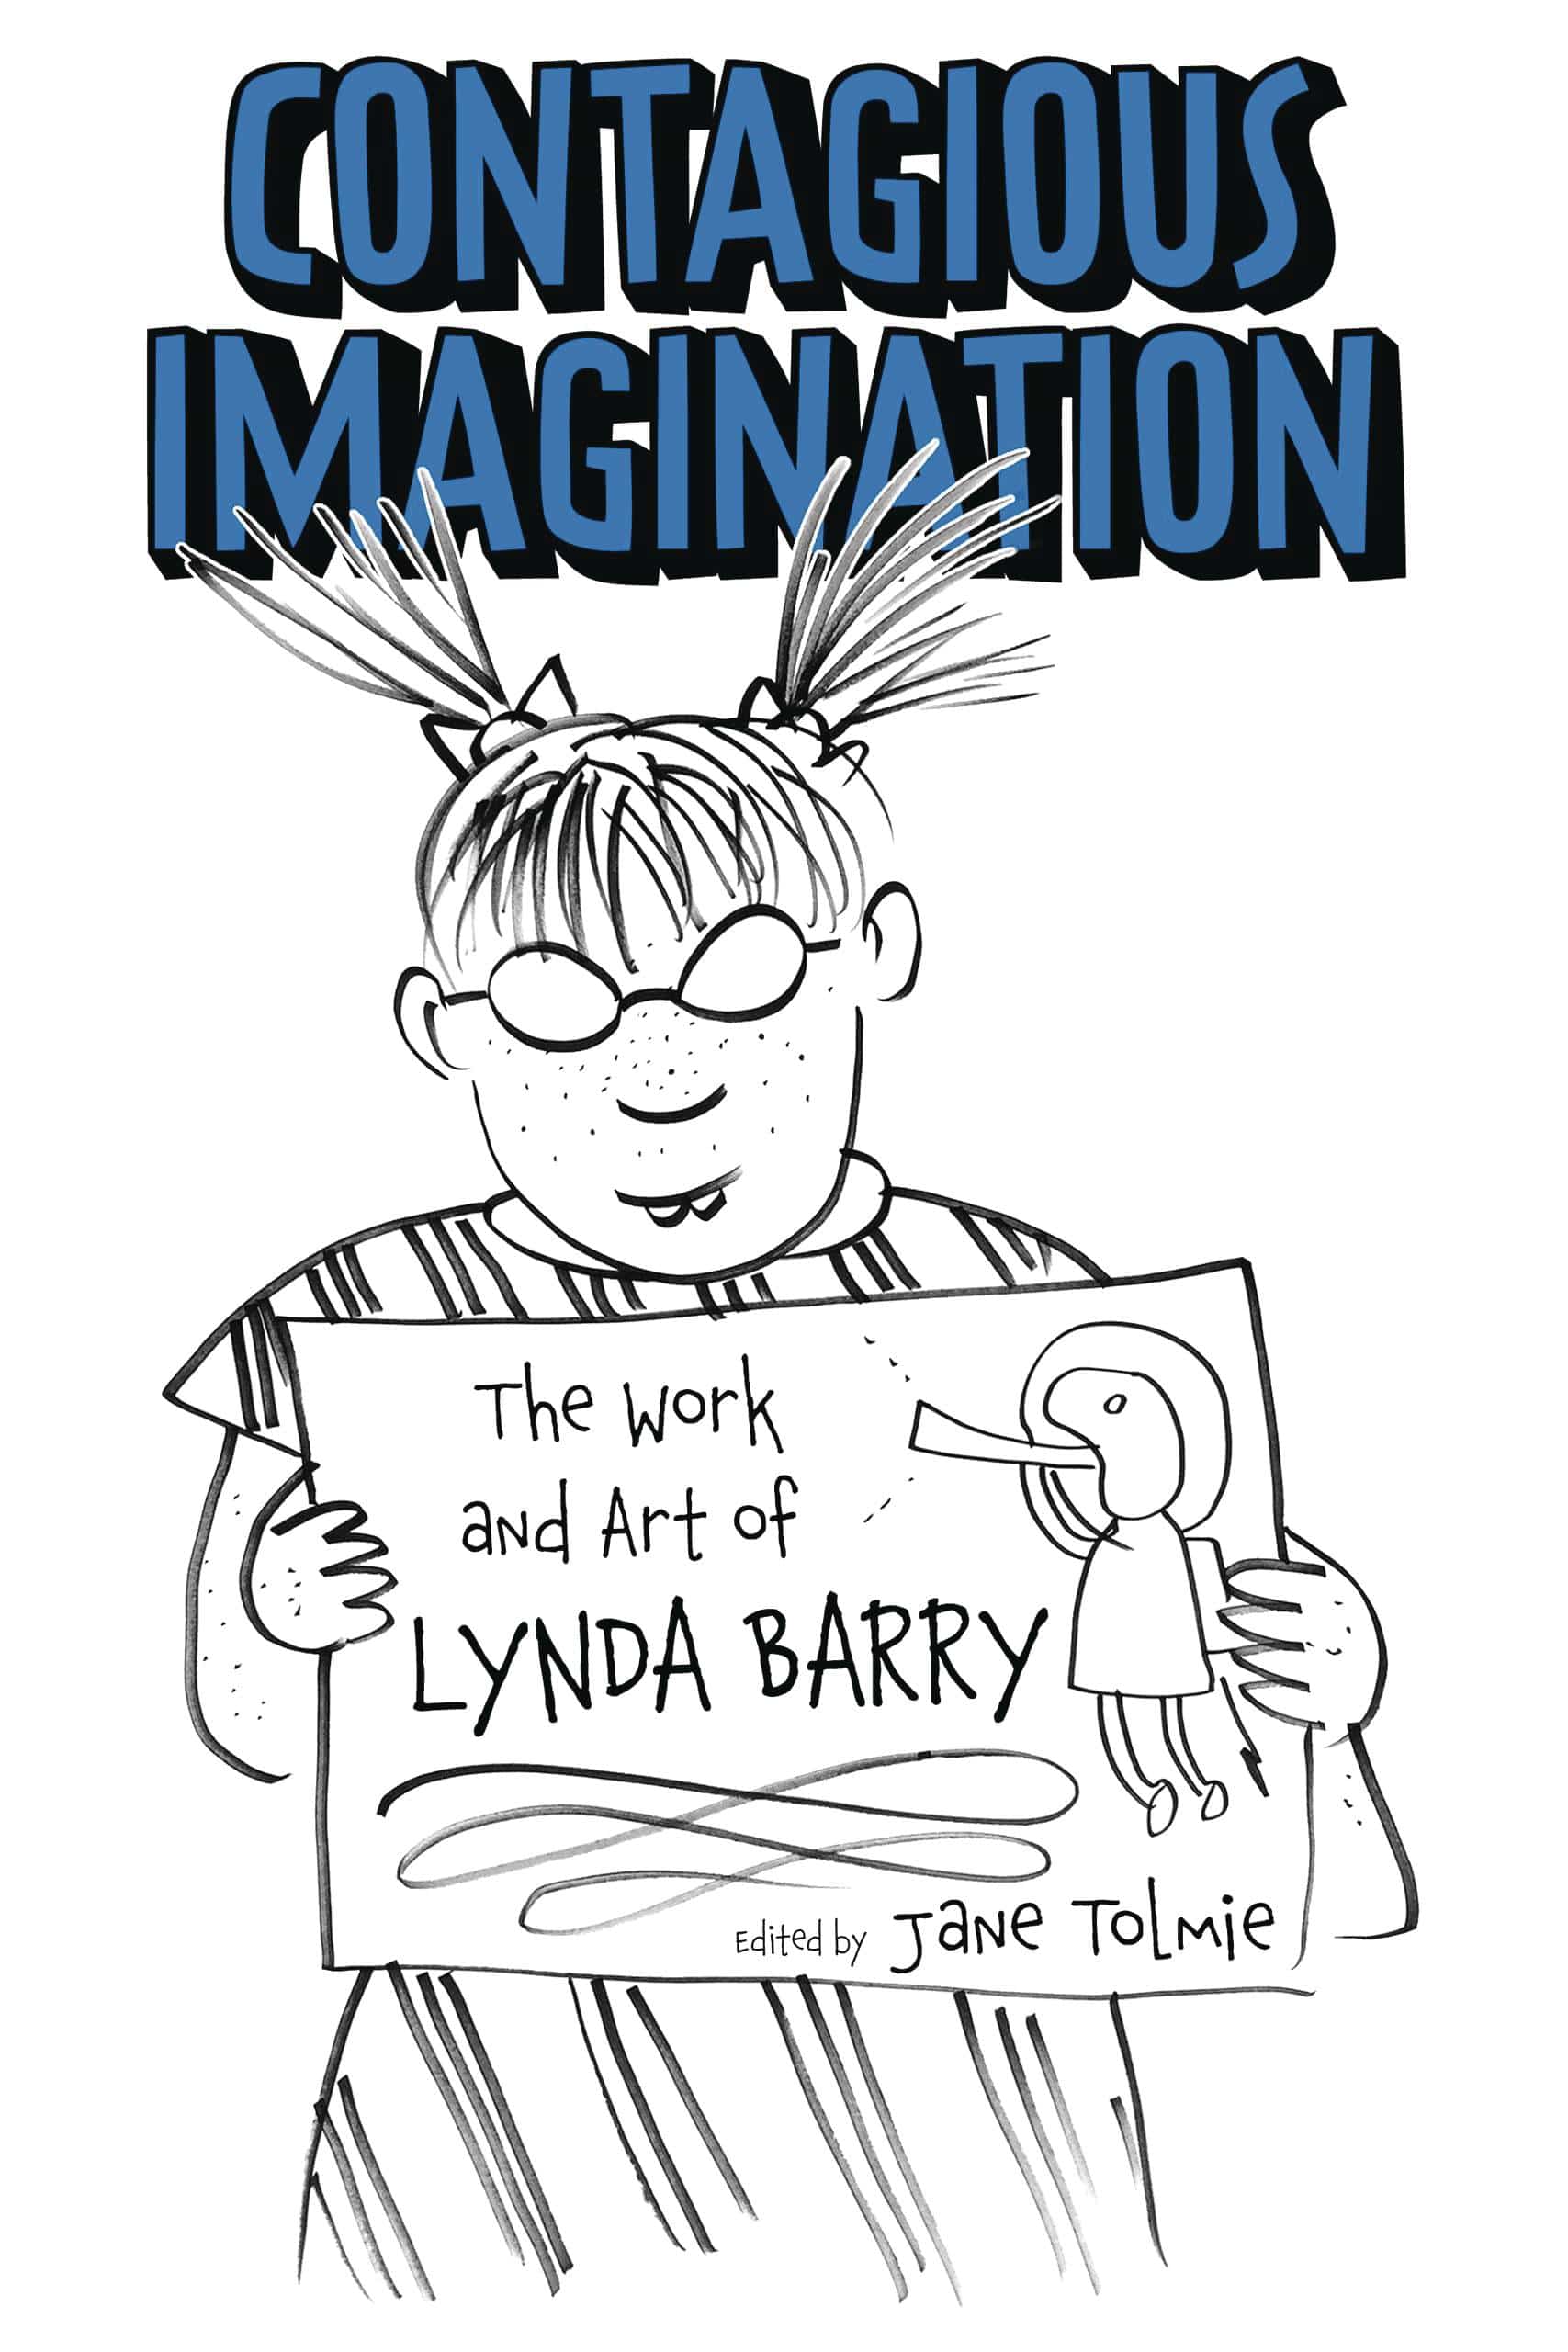 CONTAGIOUS IMAGINATION WORK & ART OF LYNDA BARRY SC - Third Eye